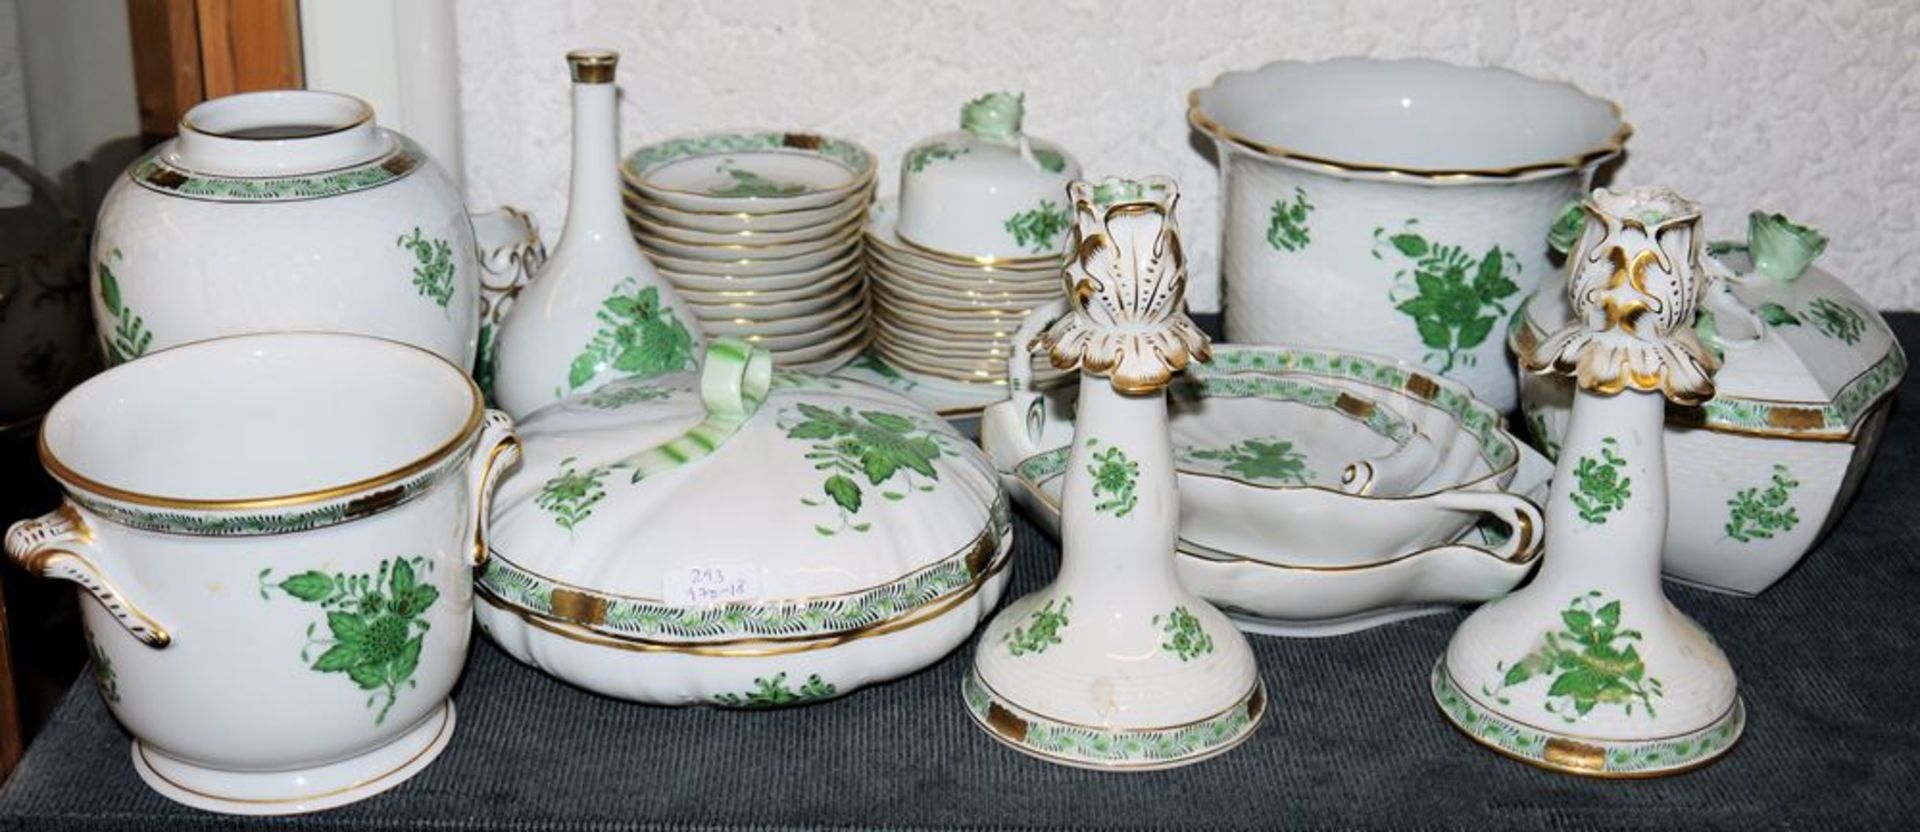 Collection of decorative porcelains Apponyi Grün, Herend